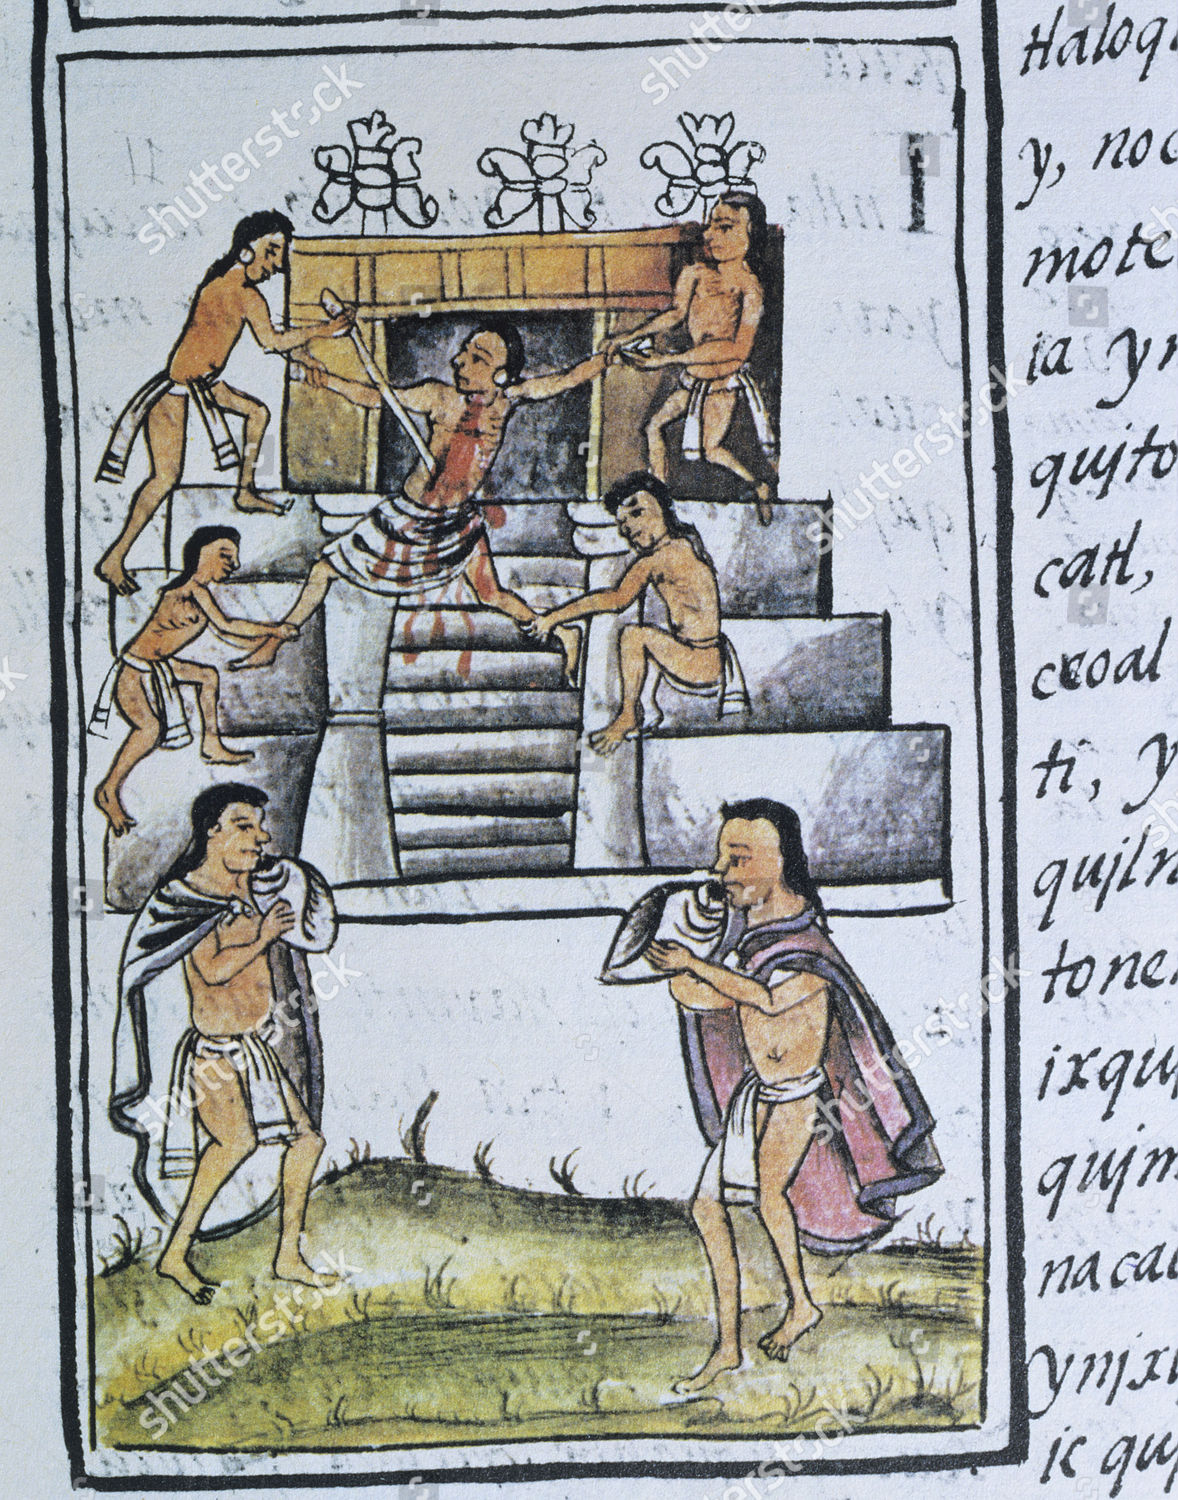 aztec sacrifice drawing